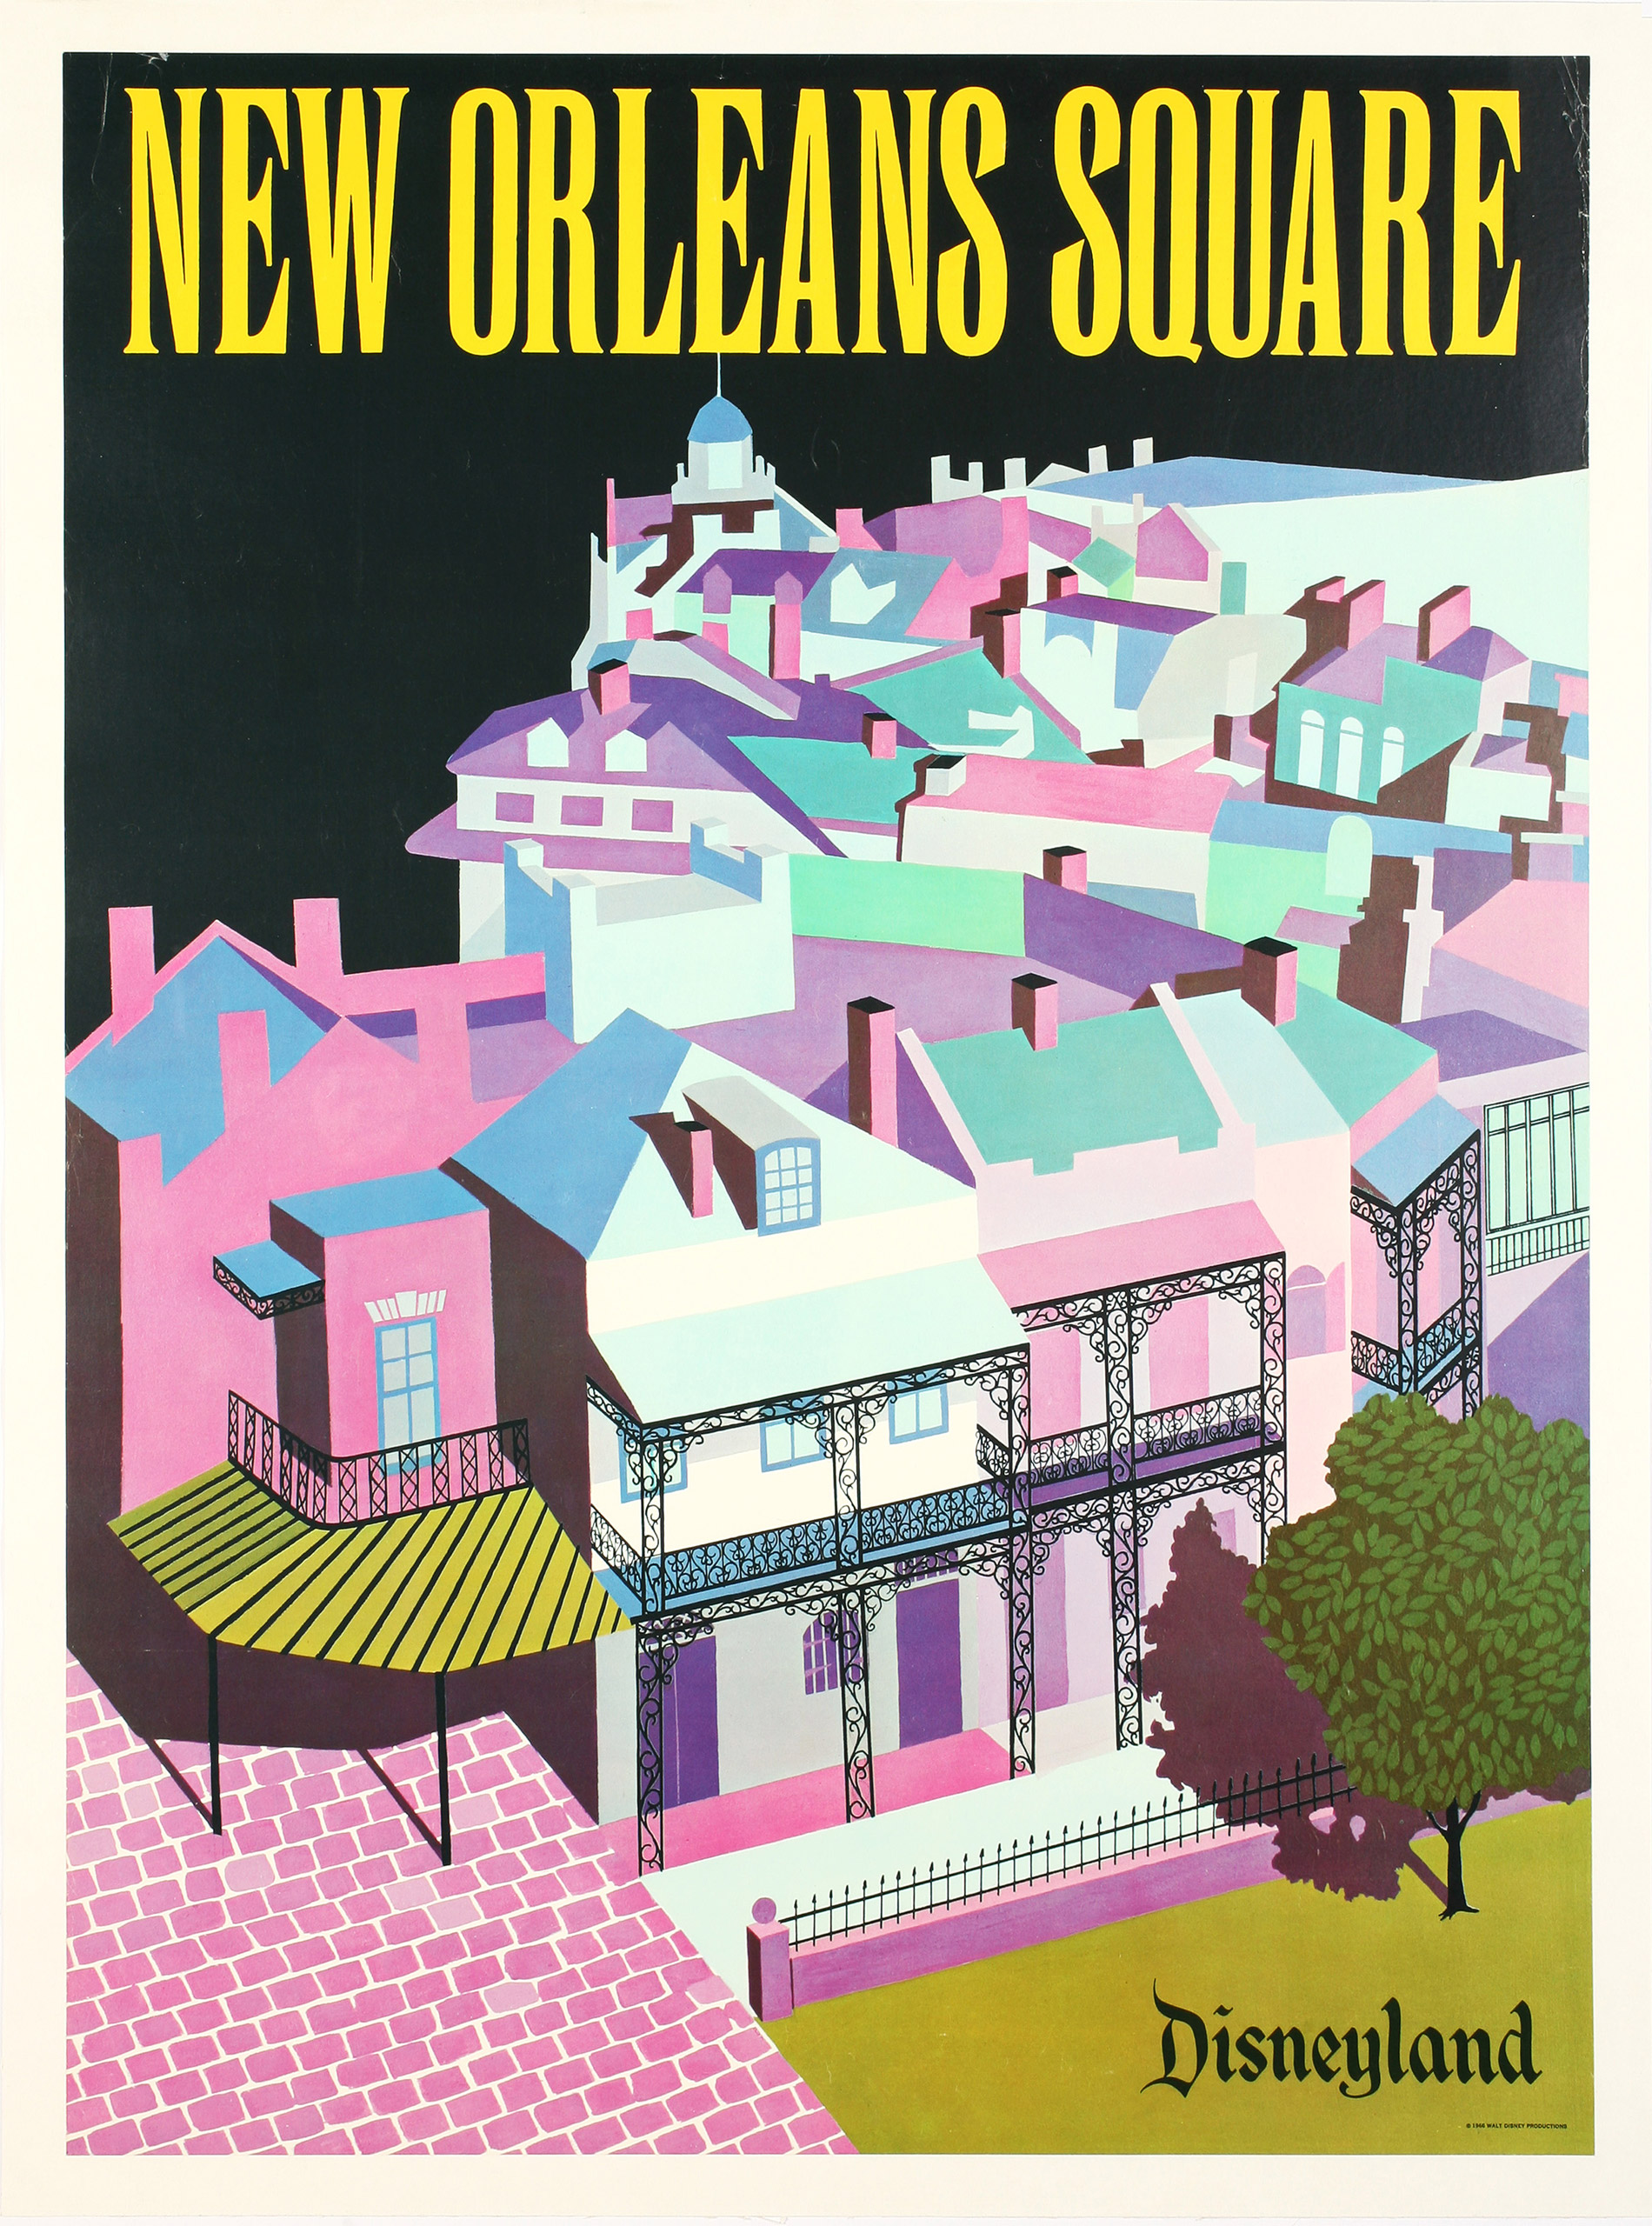 DIsneyland "New Orleans Square" Near-Attraction Poster. Disneyland, 1966.